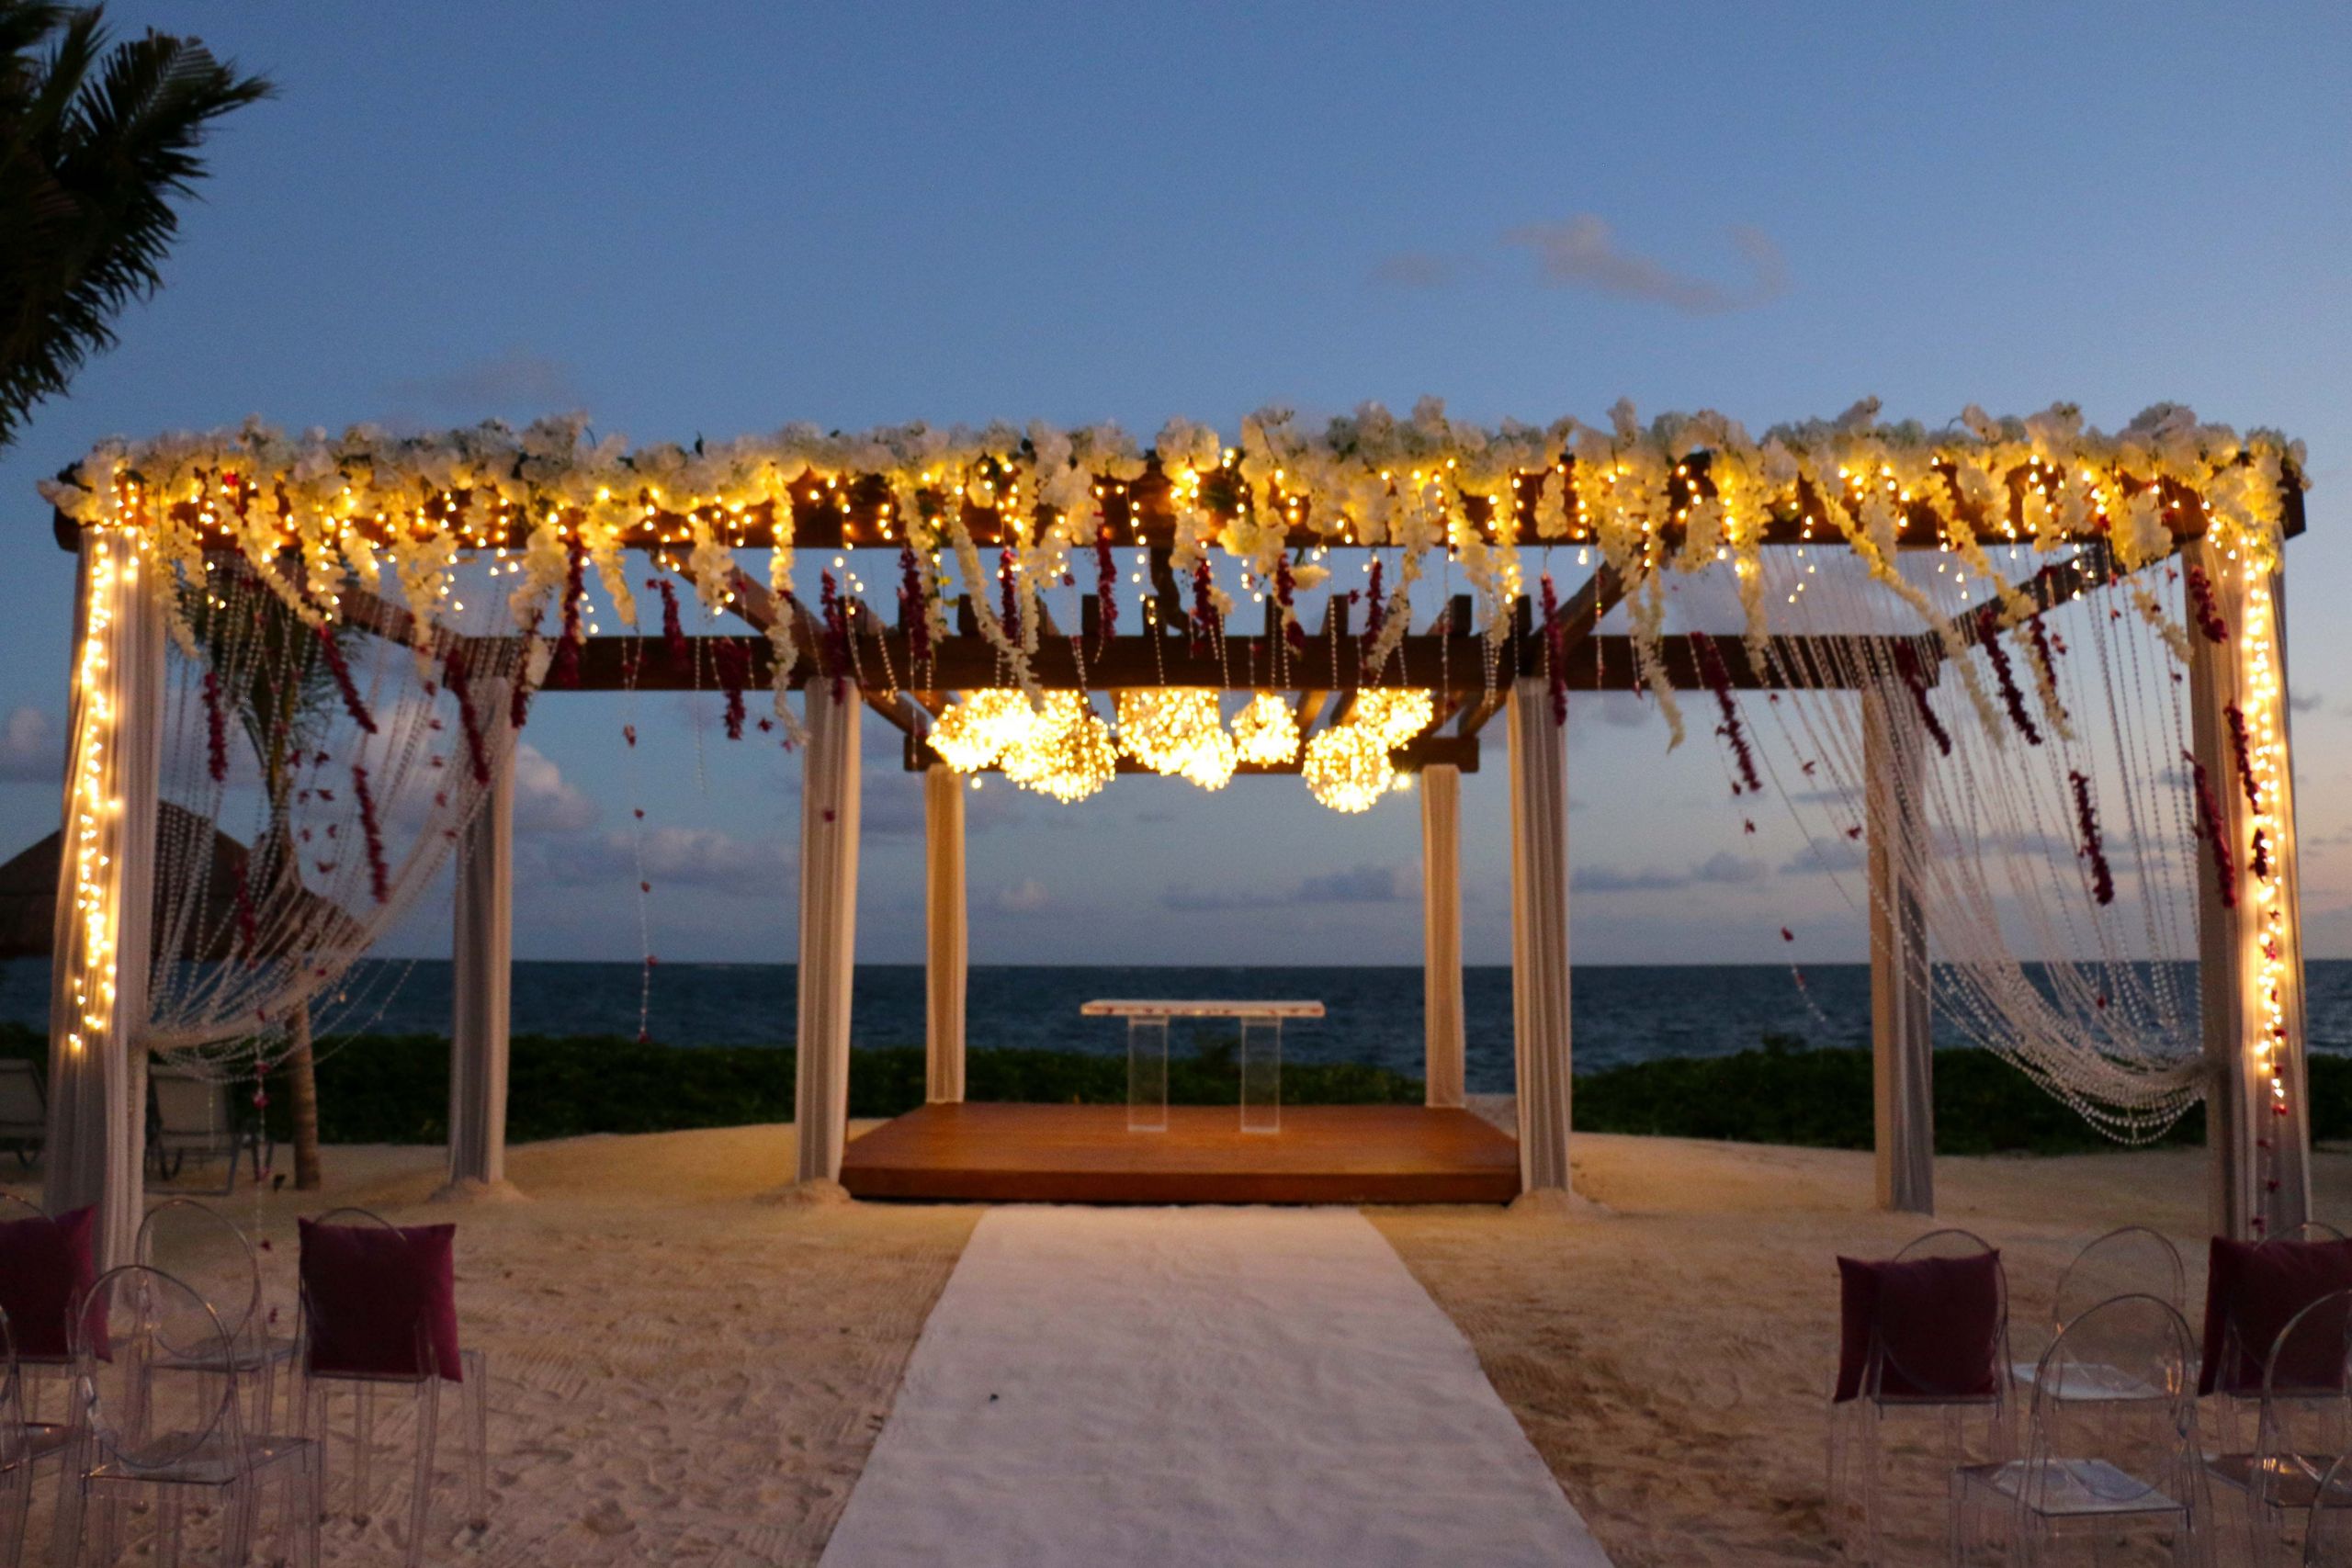 Enchanted Beach Weddings
 This nighttime setup makes for an enchanted destination